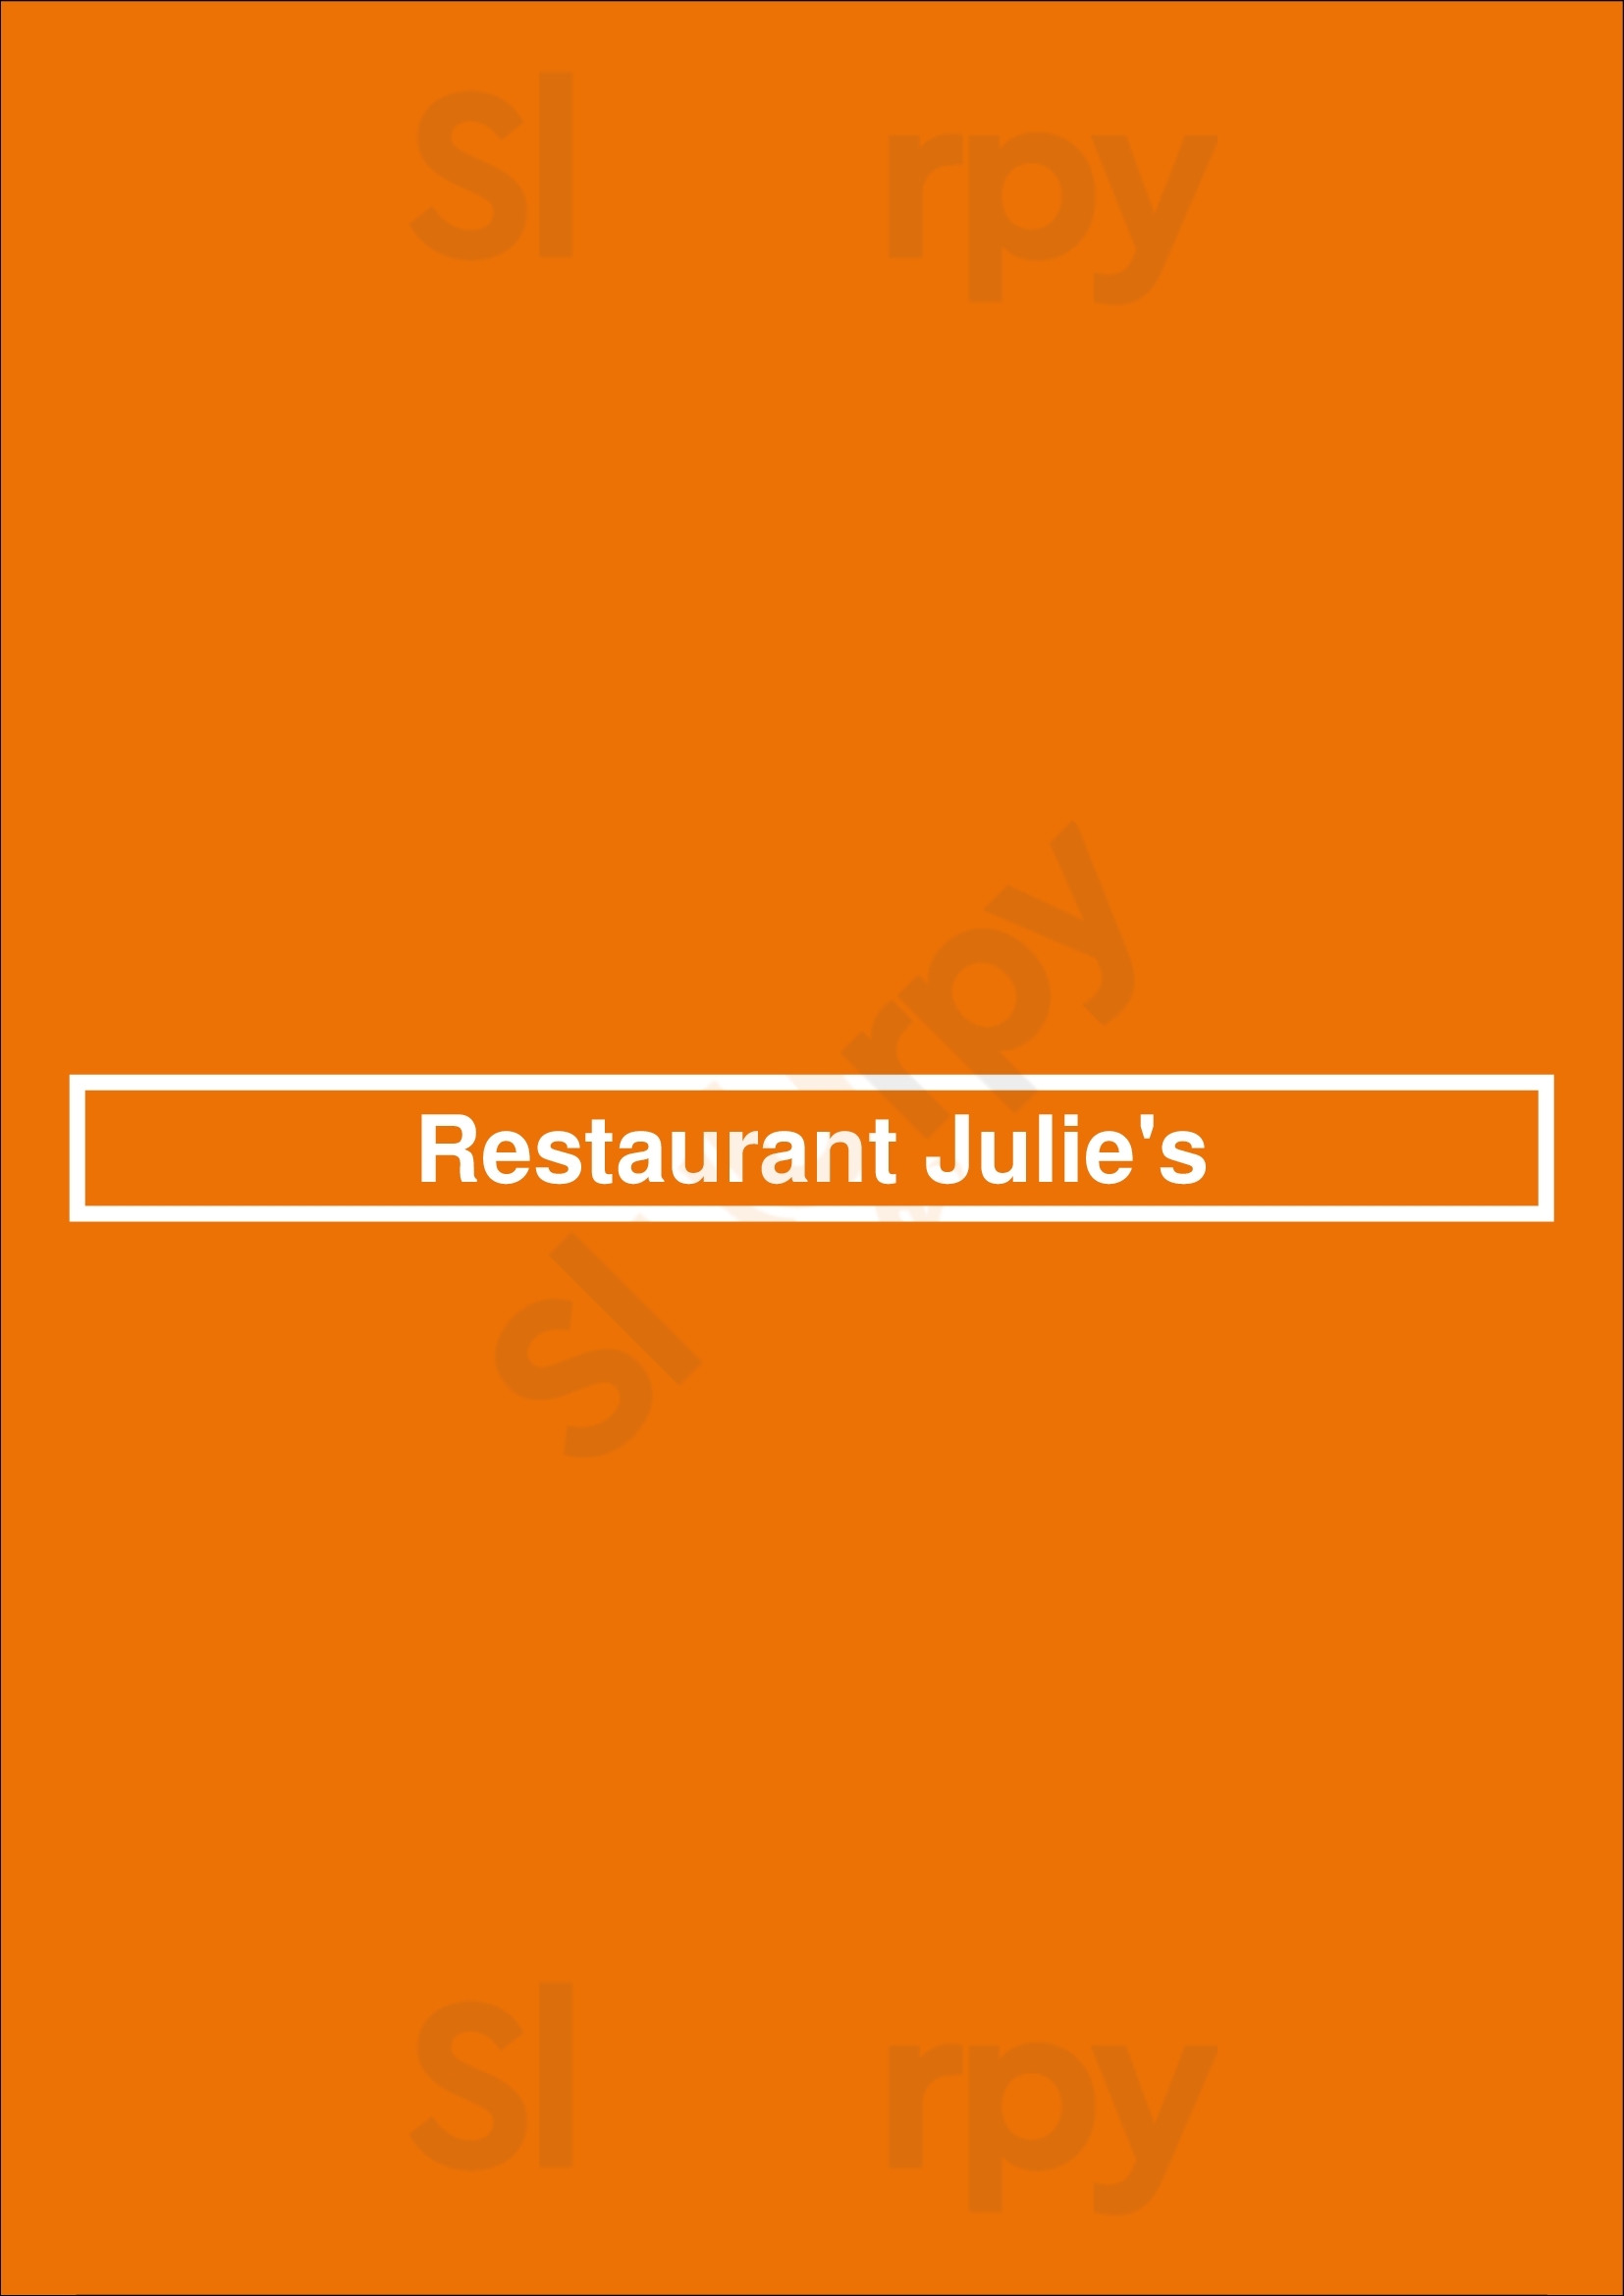 Restaurant Julie's Bergen Menu - 1